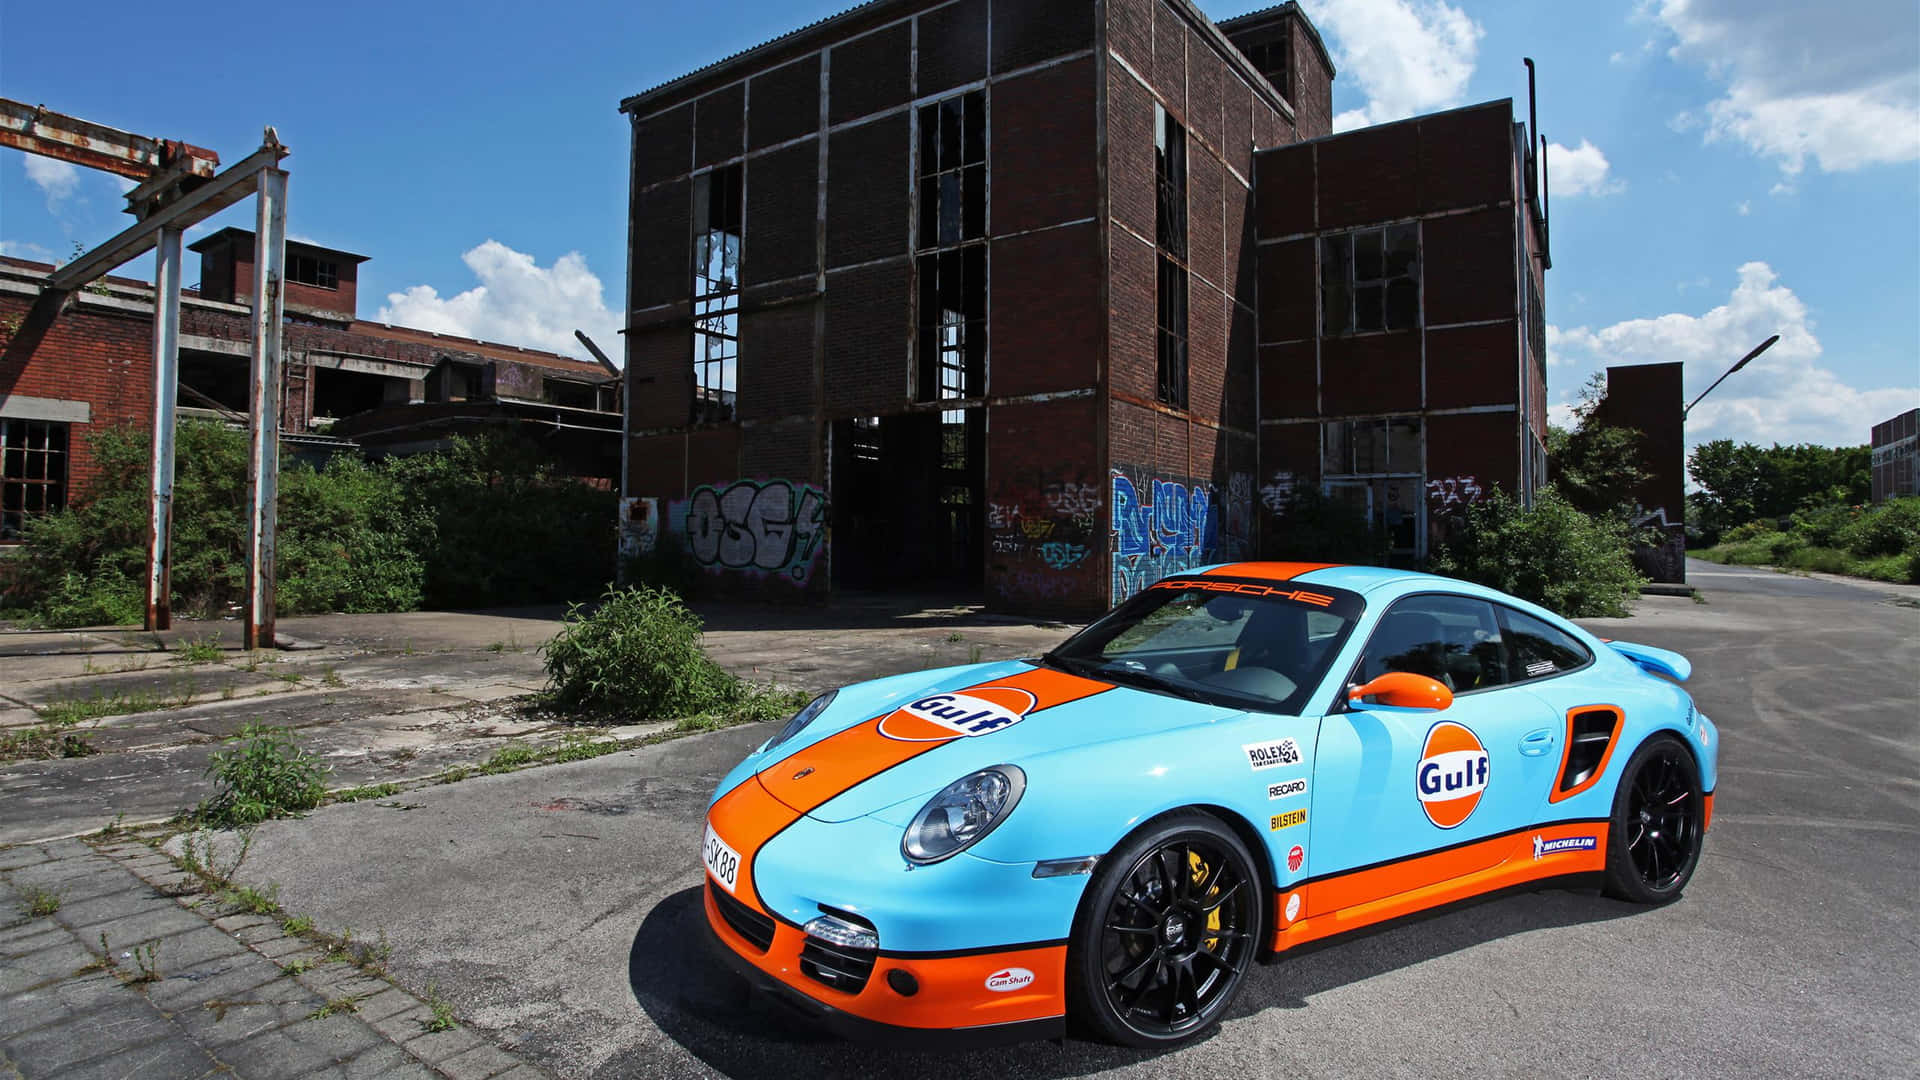 Caption: Mesmerizing Glory Of A Porsche 997 Wallpaper